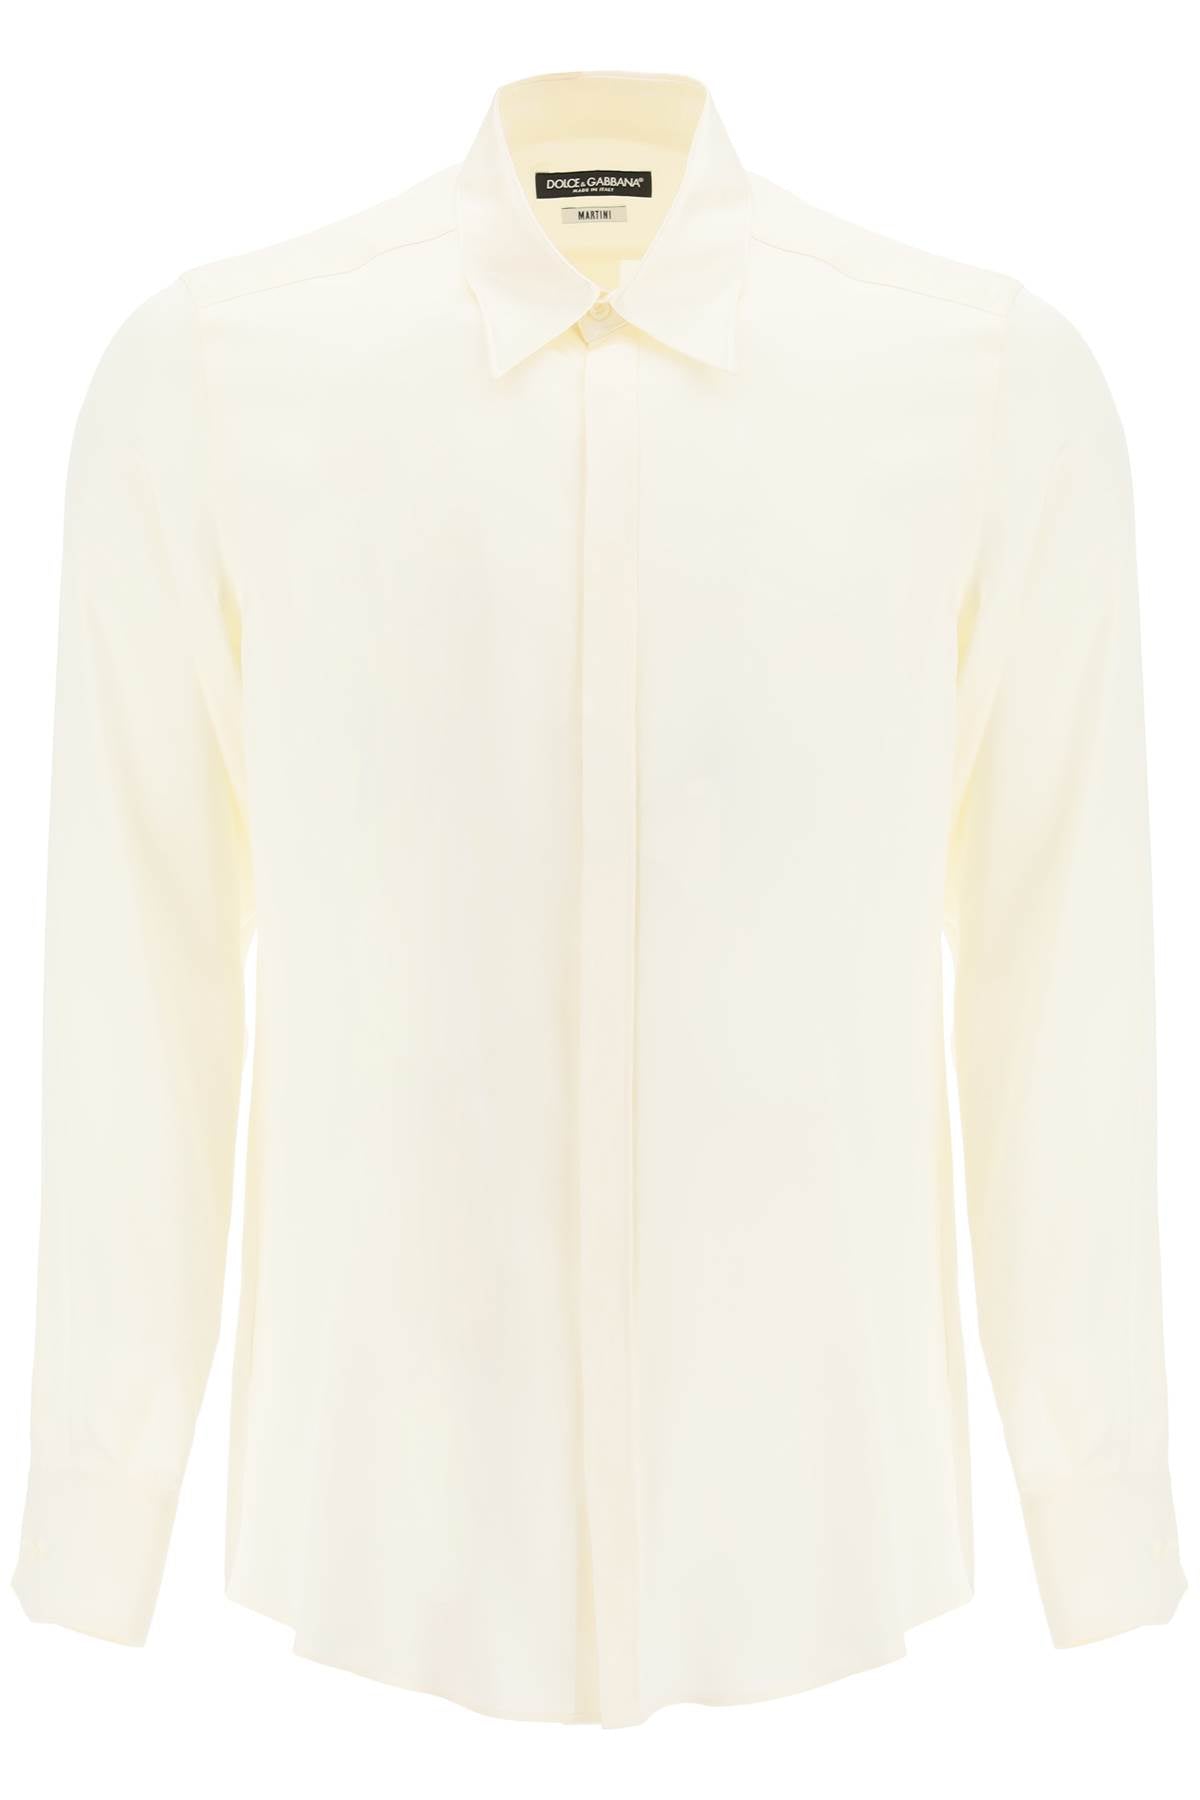 Dolce & Gabbana Silk Shirt in White for Men